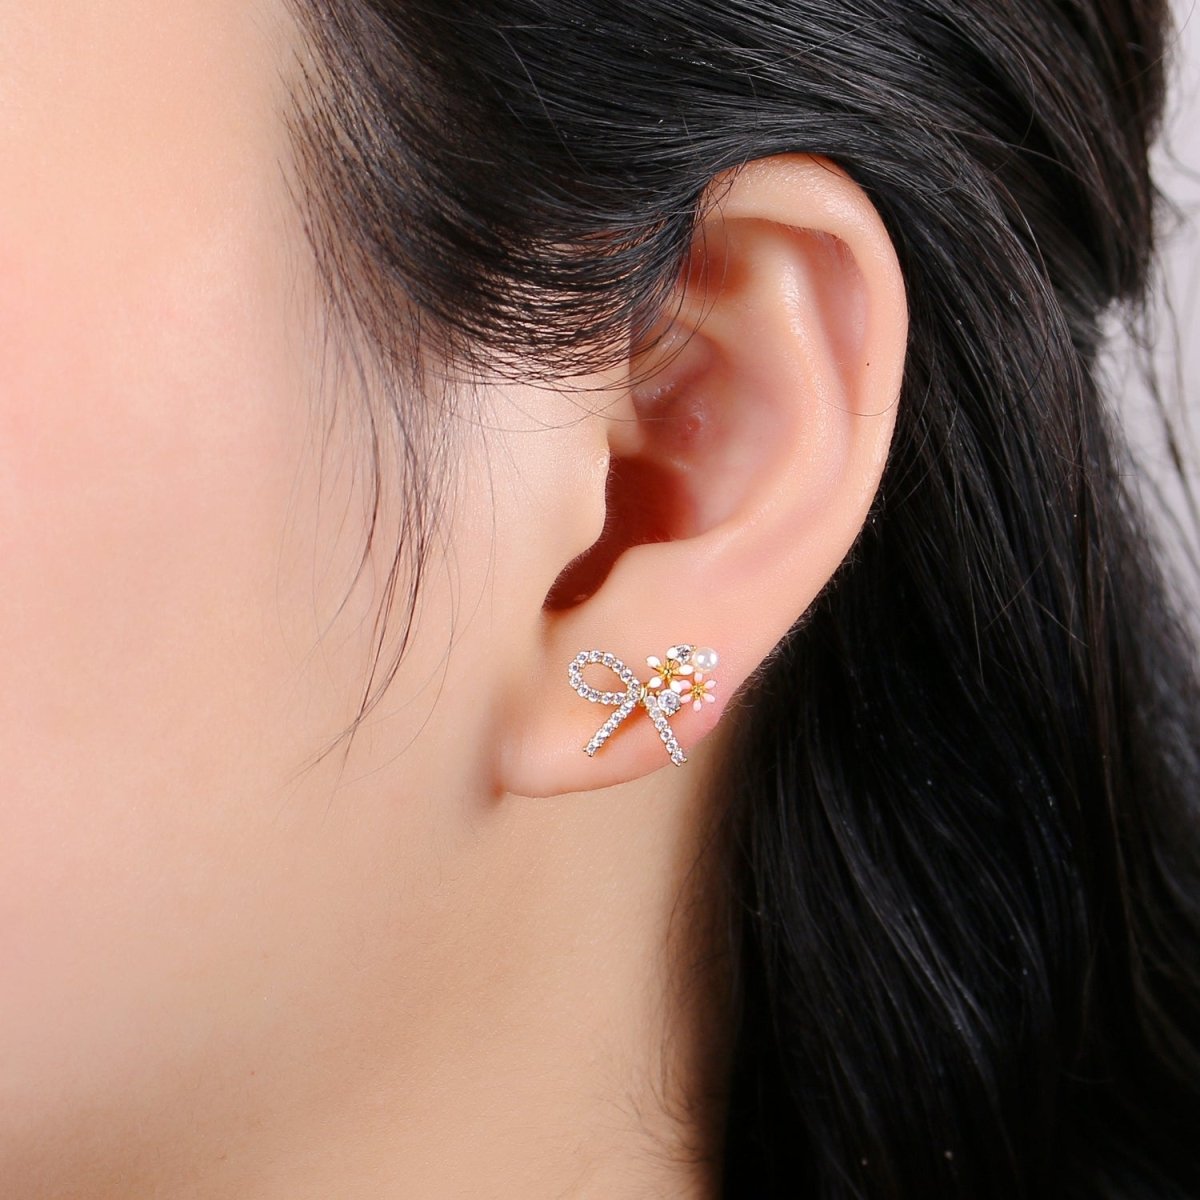 Gold Bow Earrings- 24k Gold Tiny Dainty Small Bow White CZ Gem Minimalist Jewelry Studs for Women Q-384 Q-385 - DLUXCA